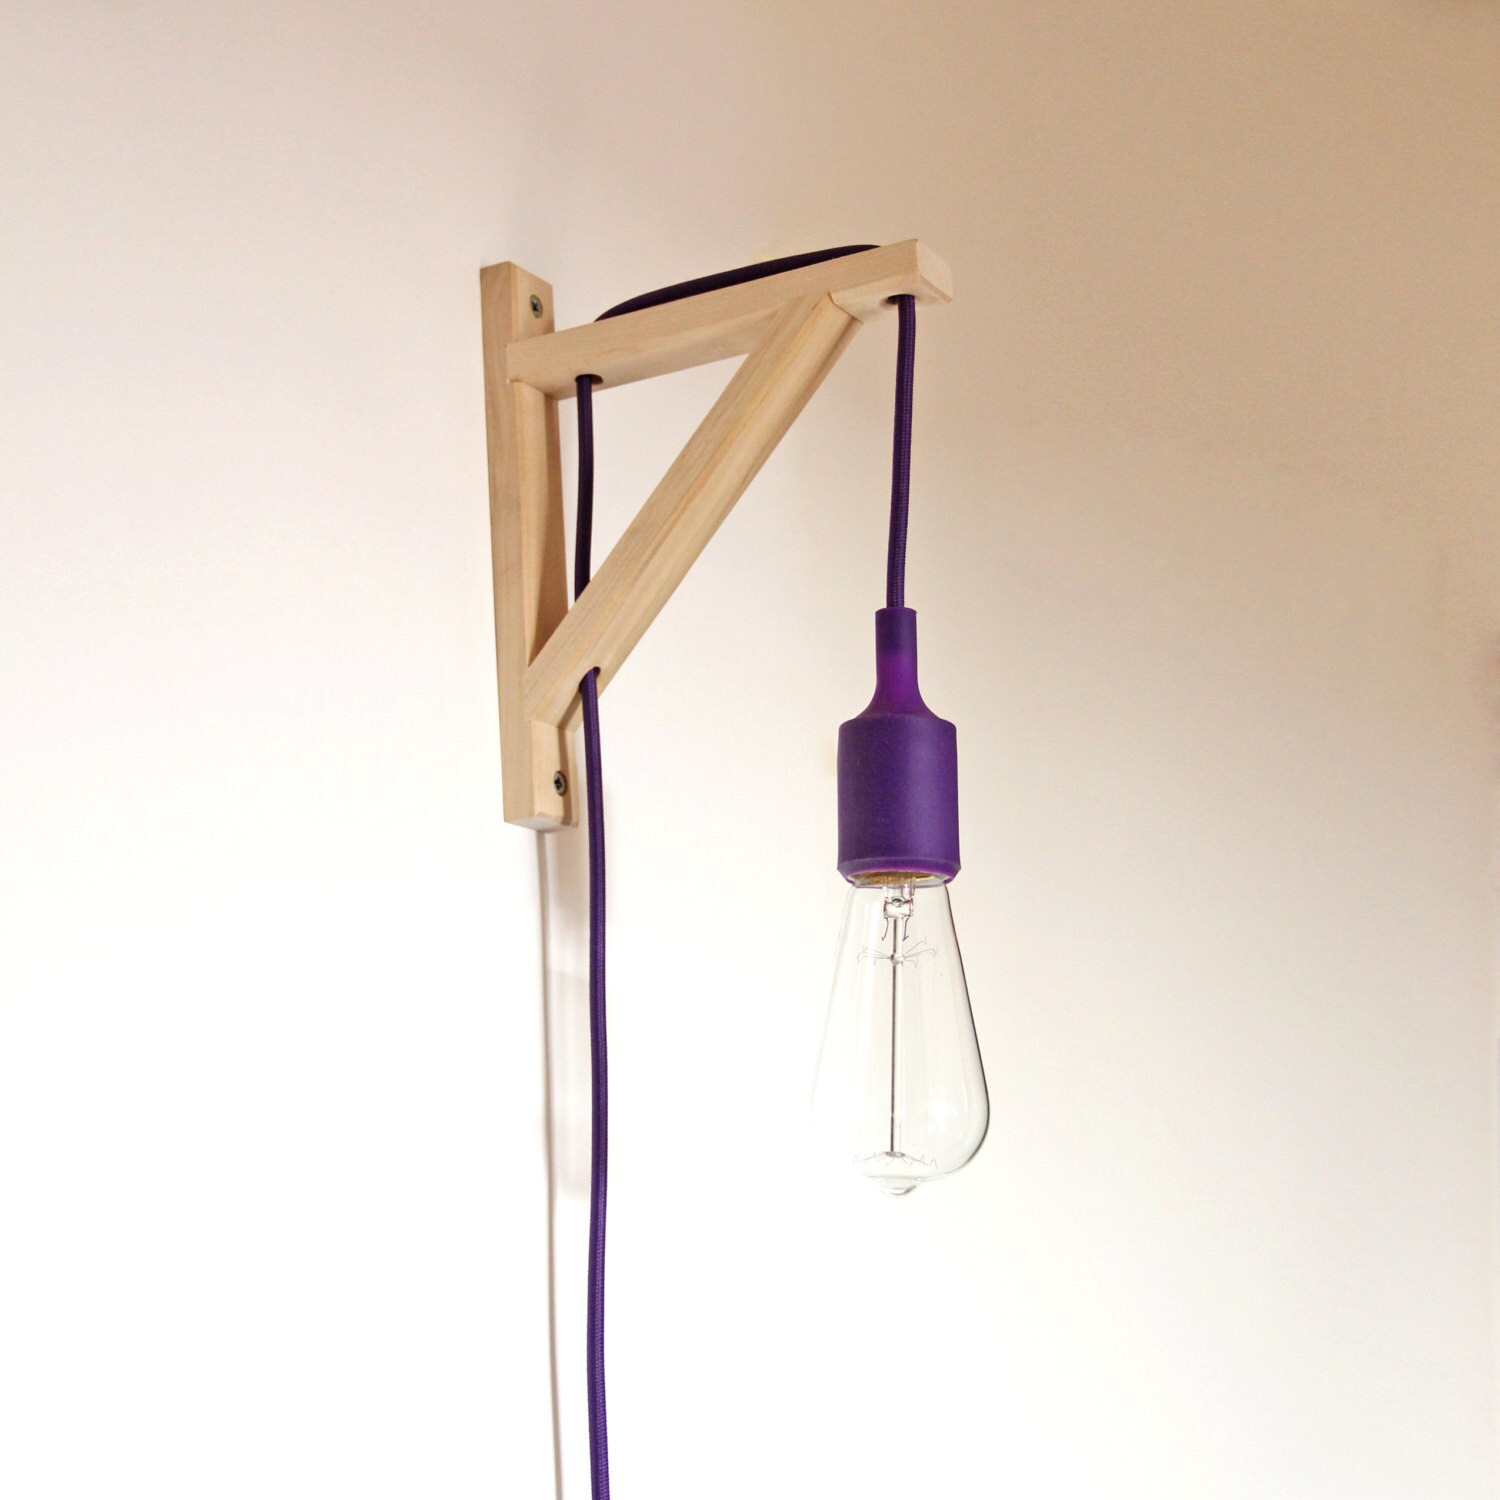 Lampe-Wandhalterung aus Holz Peq-Kabel Textil Farbe lila mit